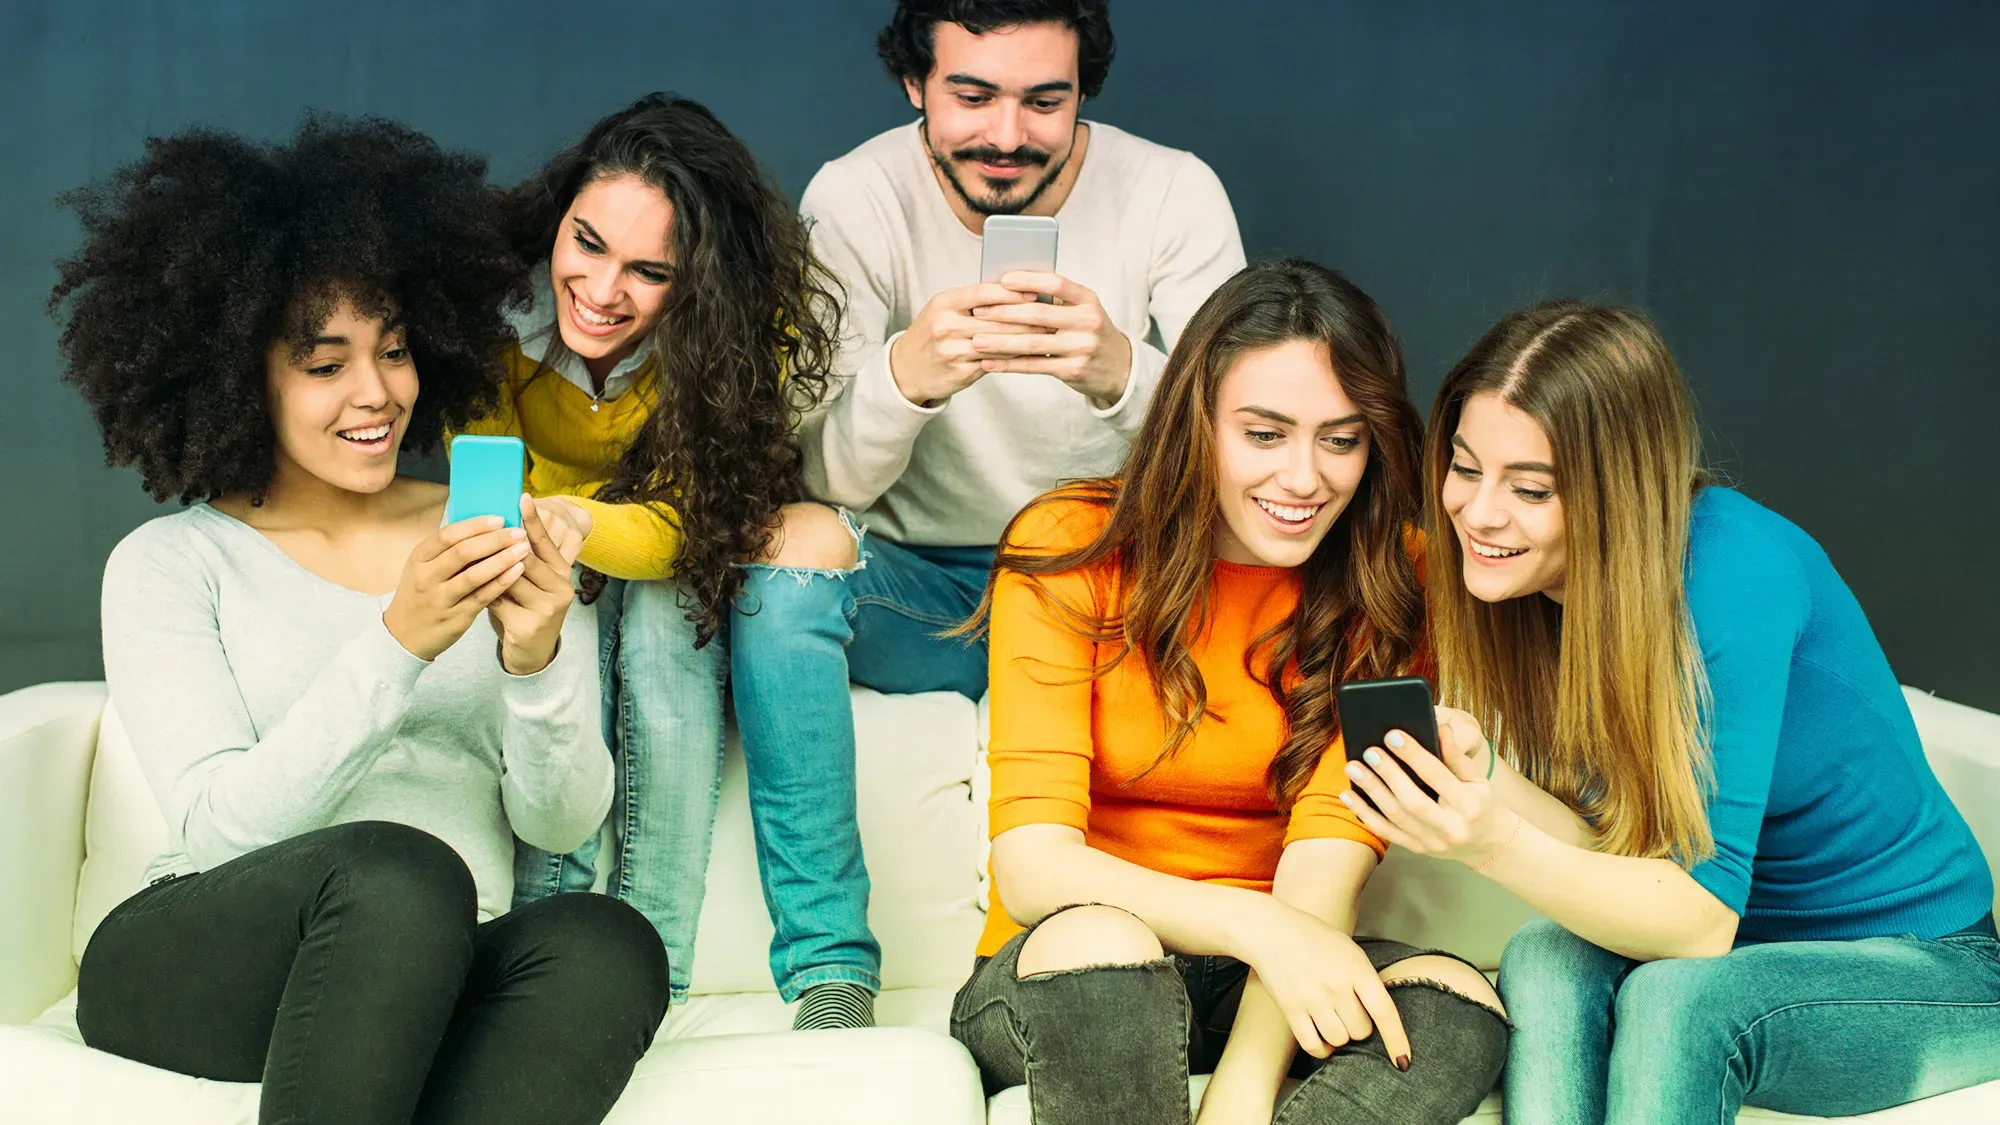 Digital Marketing: To Reach Millennials